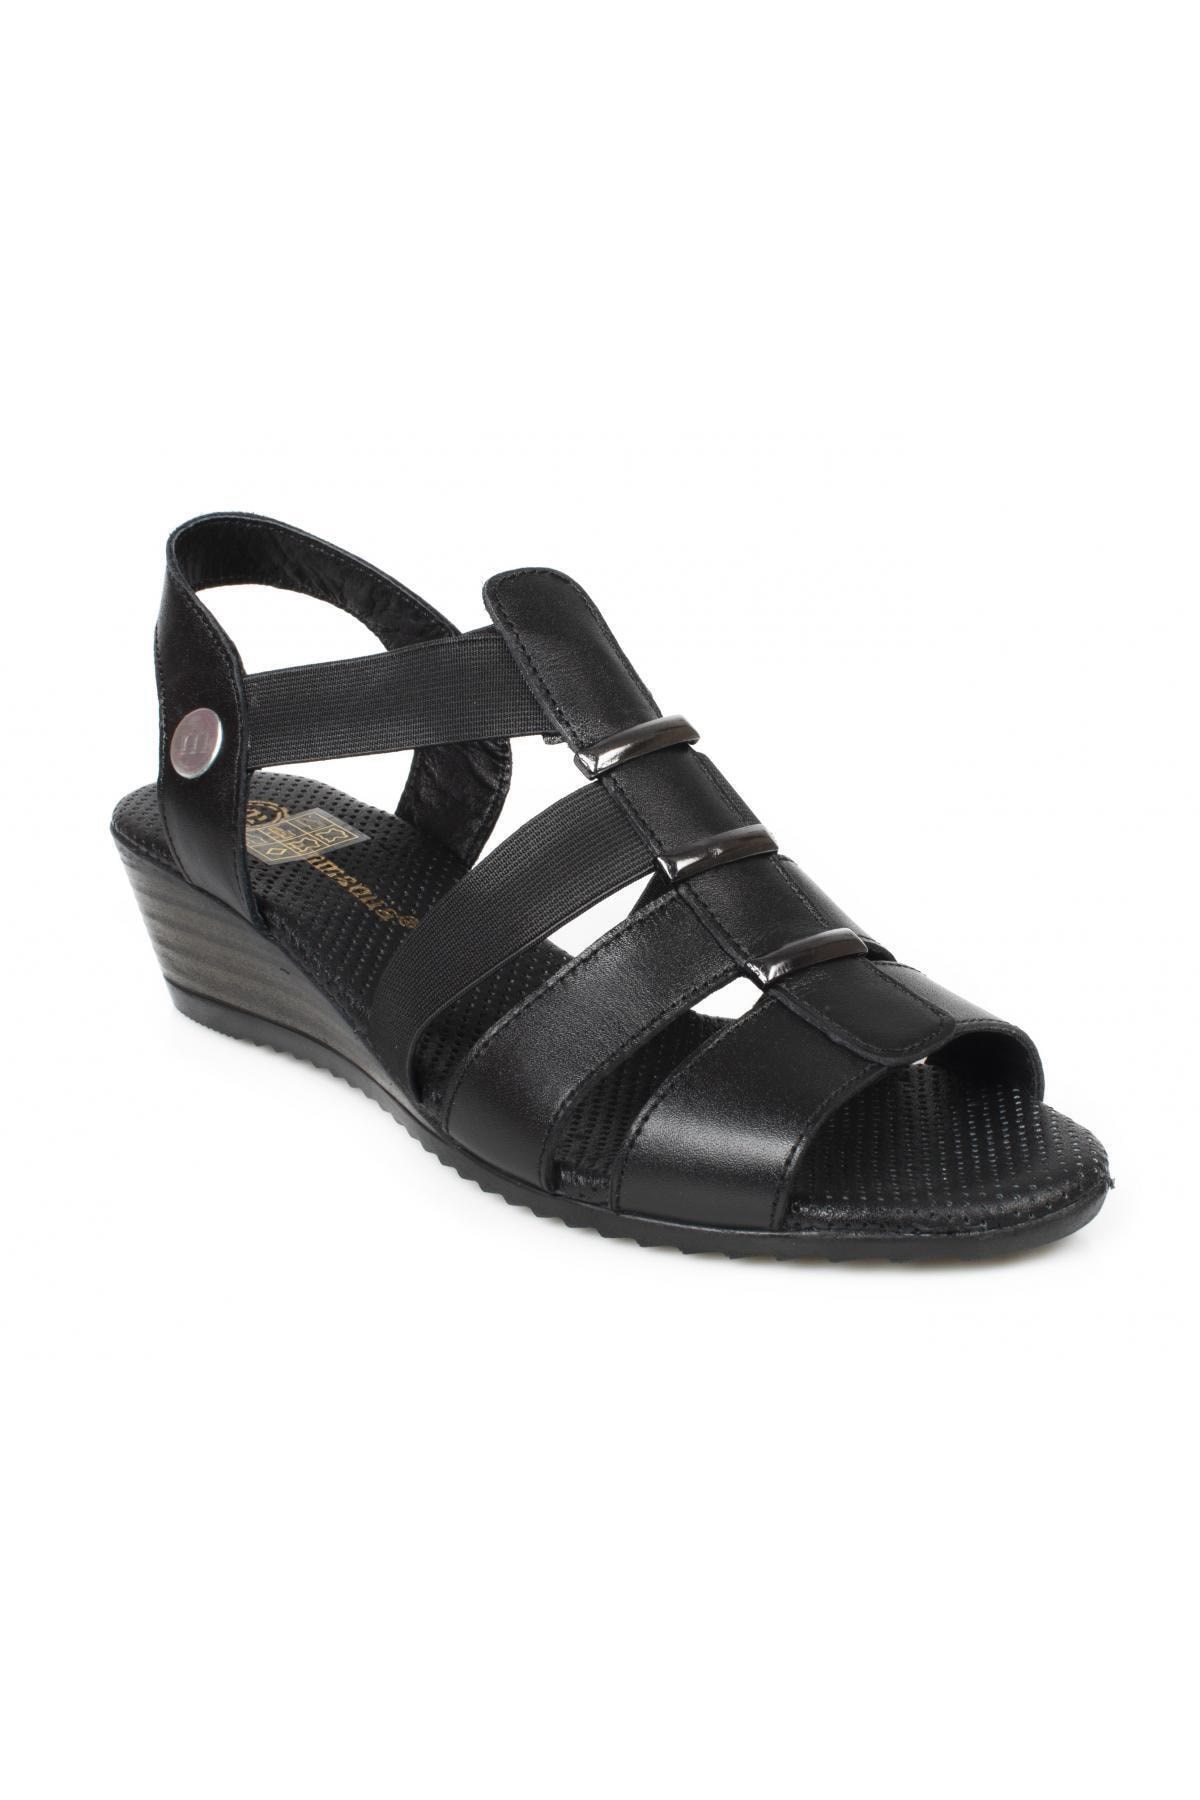 Mammamia Kadın Sandalet D22YS-1310 Siyah Faber